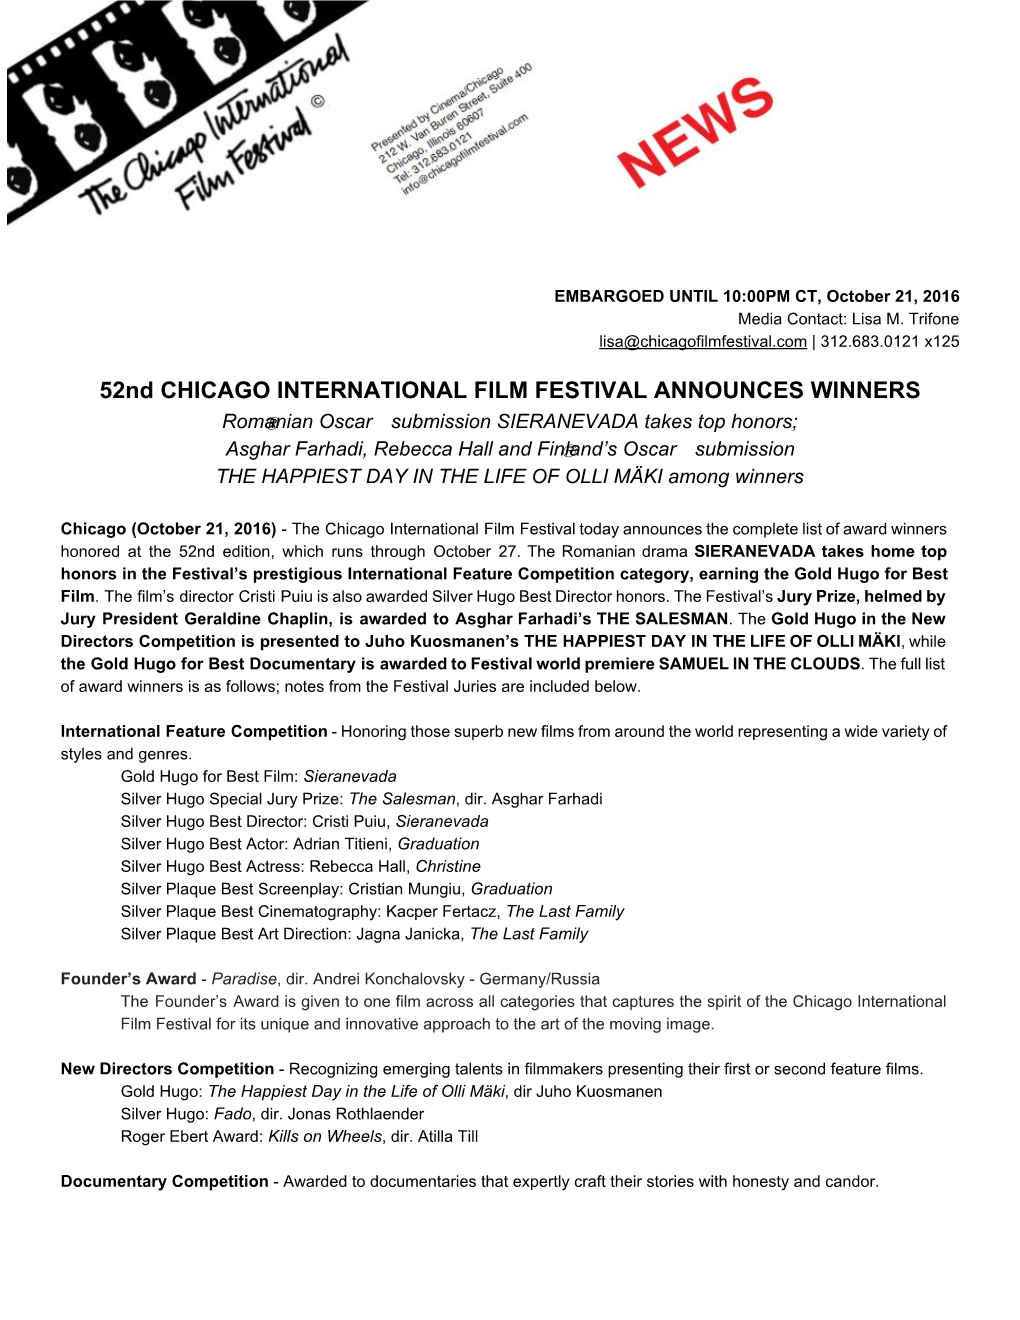 52Nd CHICAGO INTERNATIONAL FILM FESTIVAL ANNOUNCES